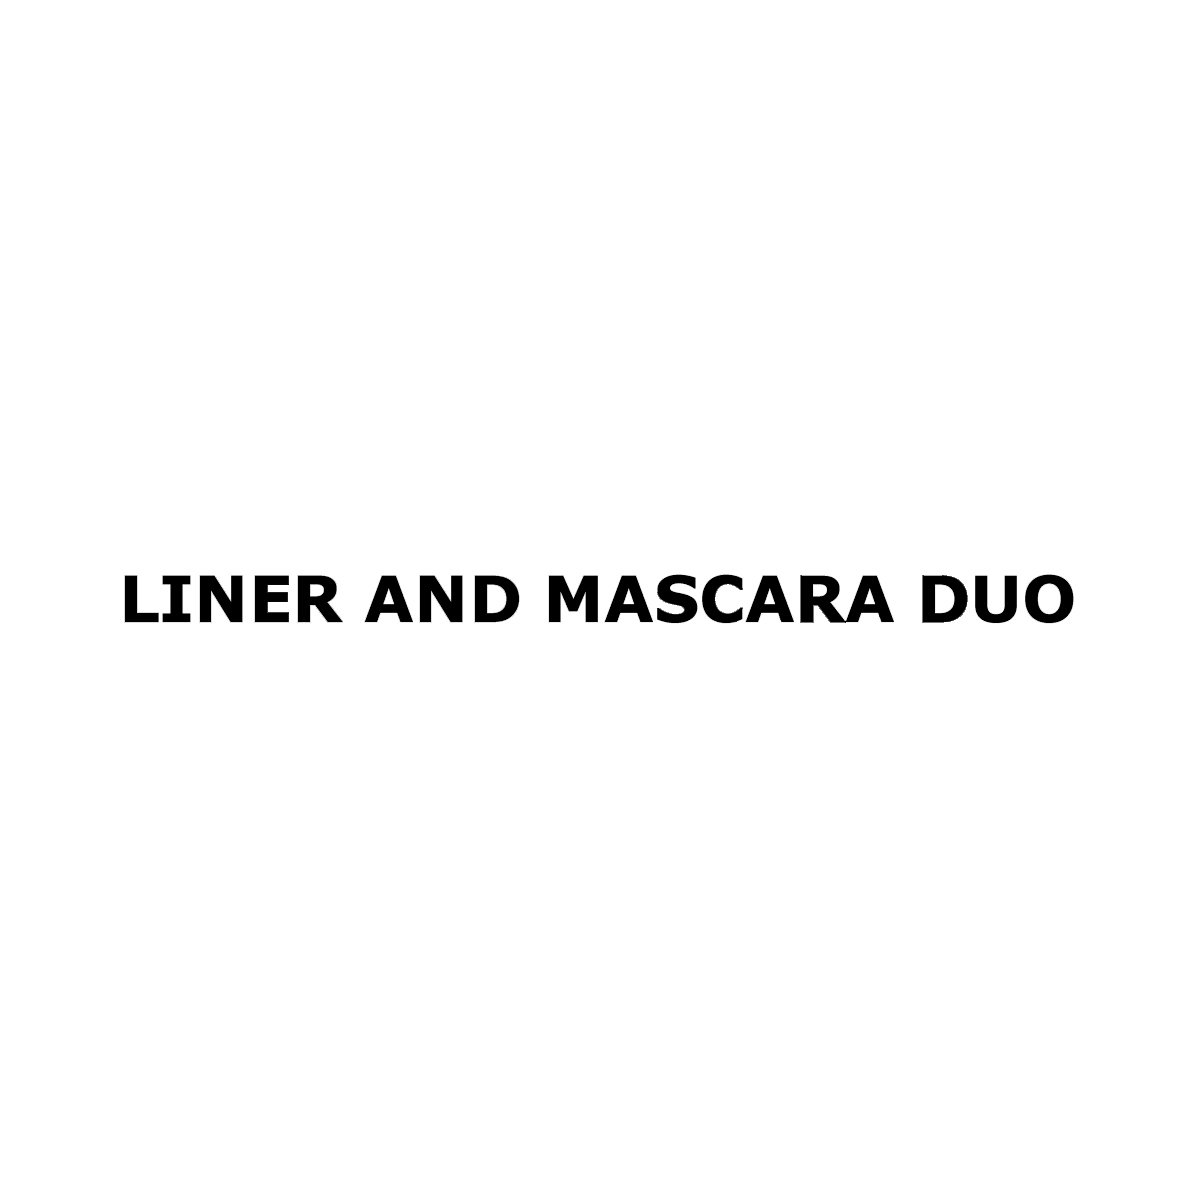  LINER AND MASCARA DUO